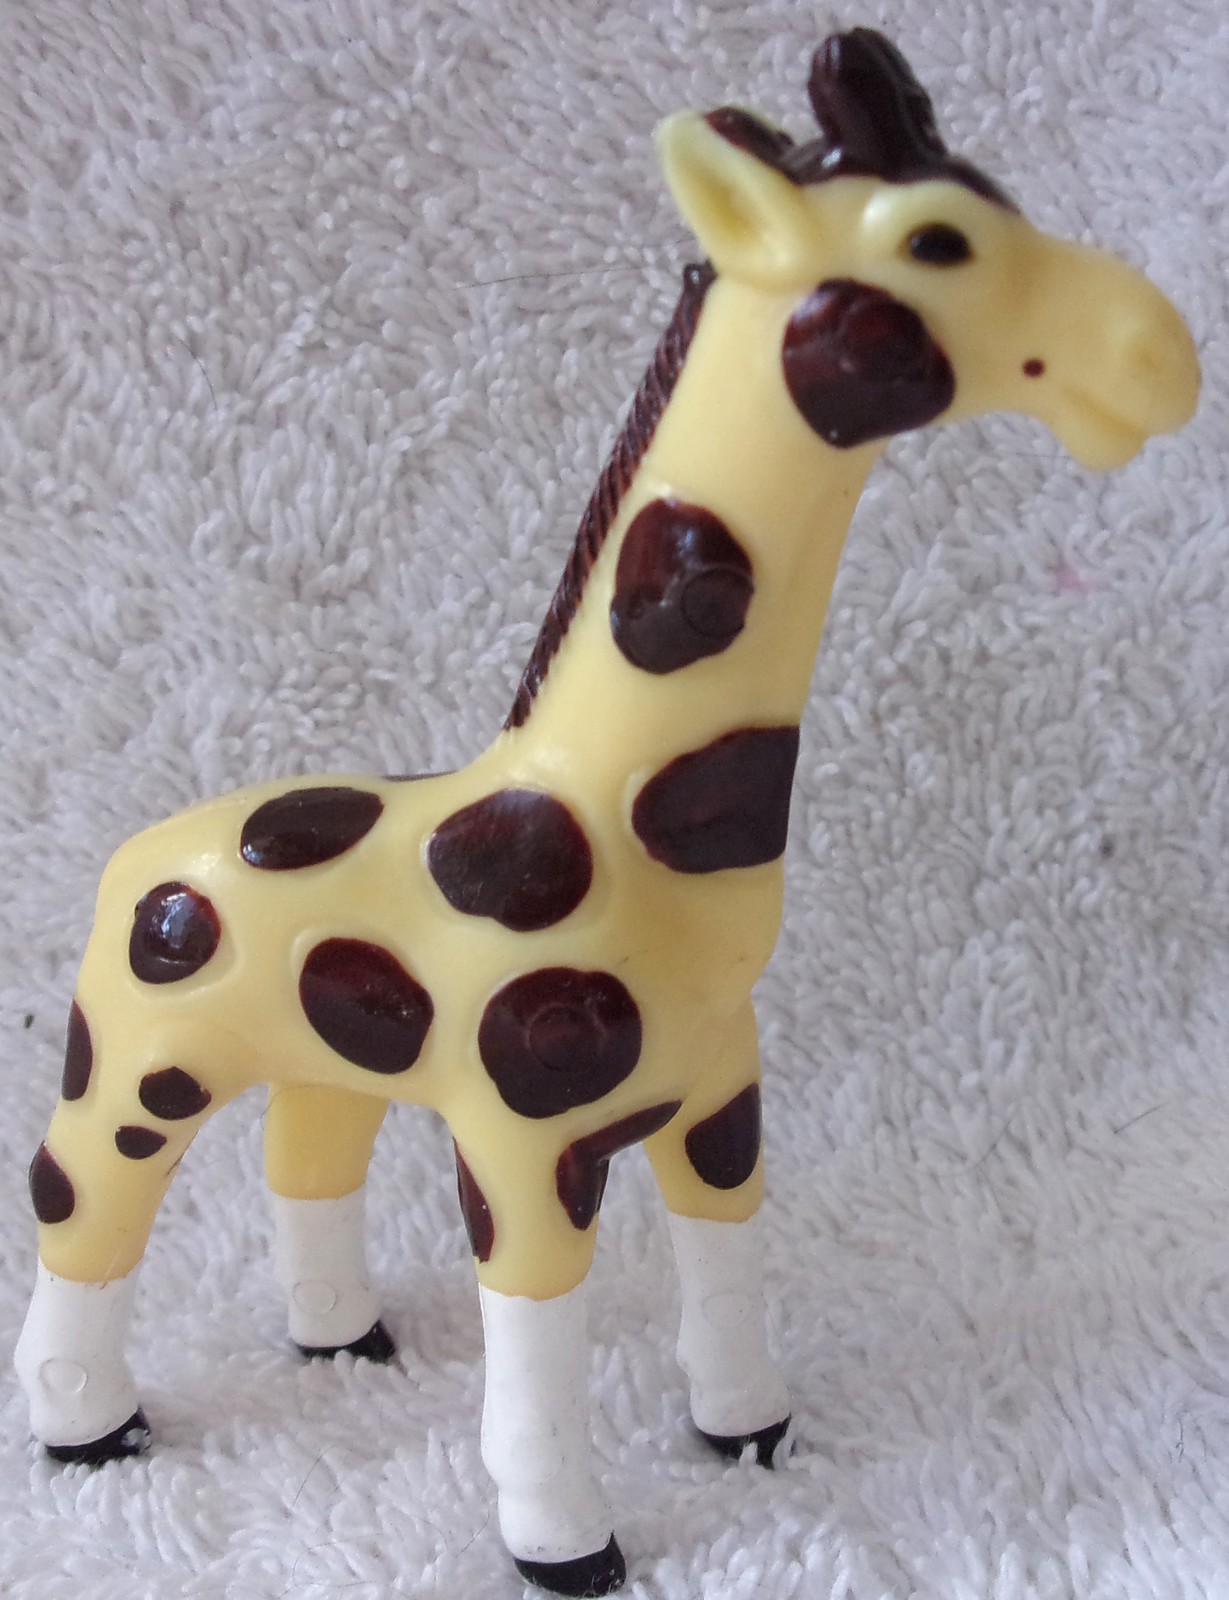 1994 Willton Giraffe Figure For Cake Decorating - $4.99